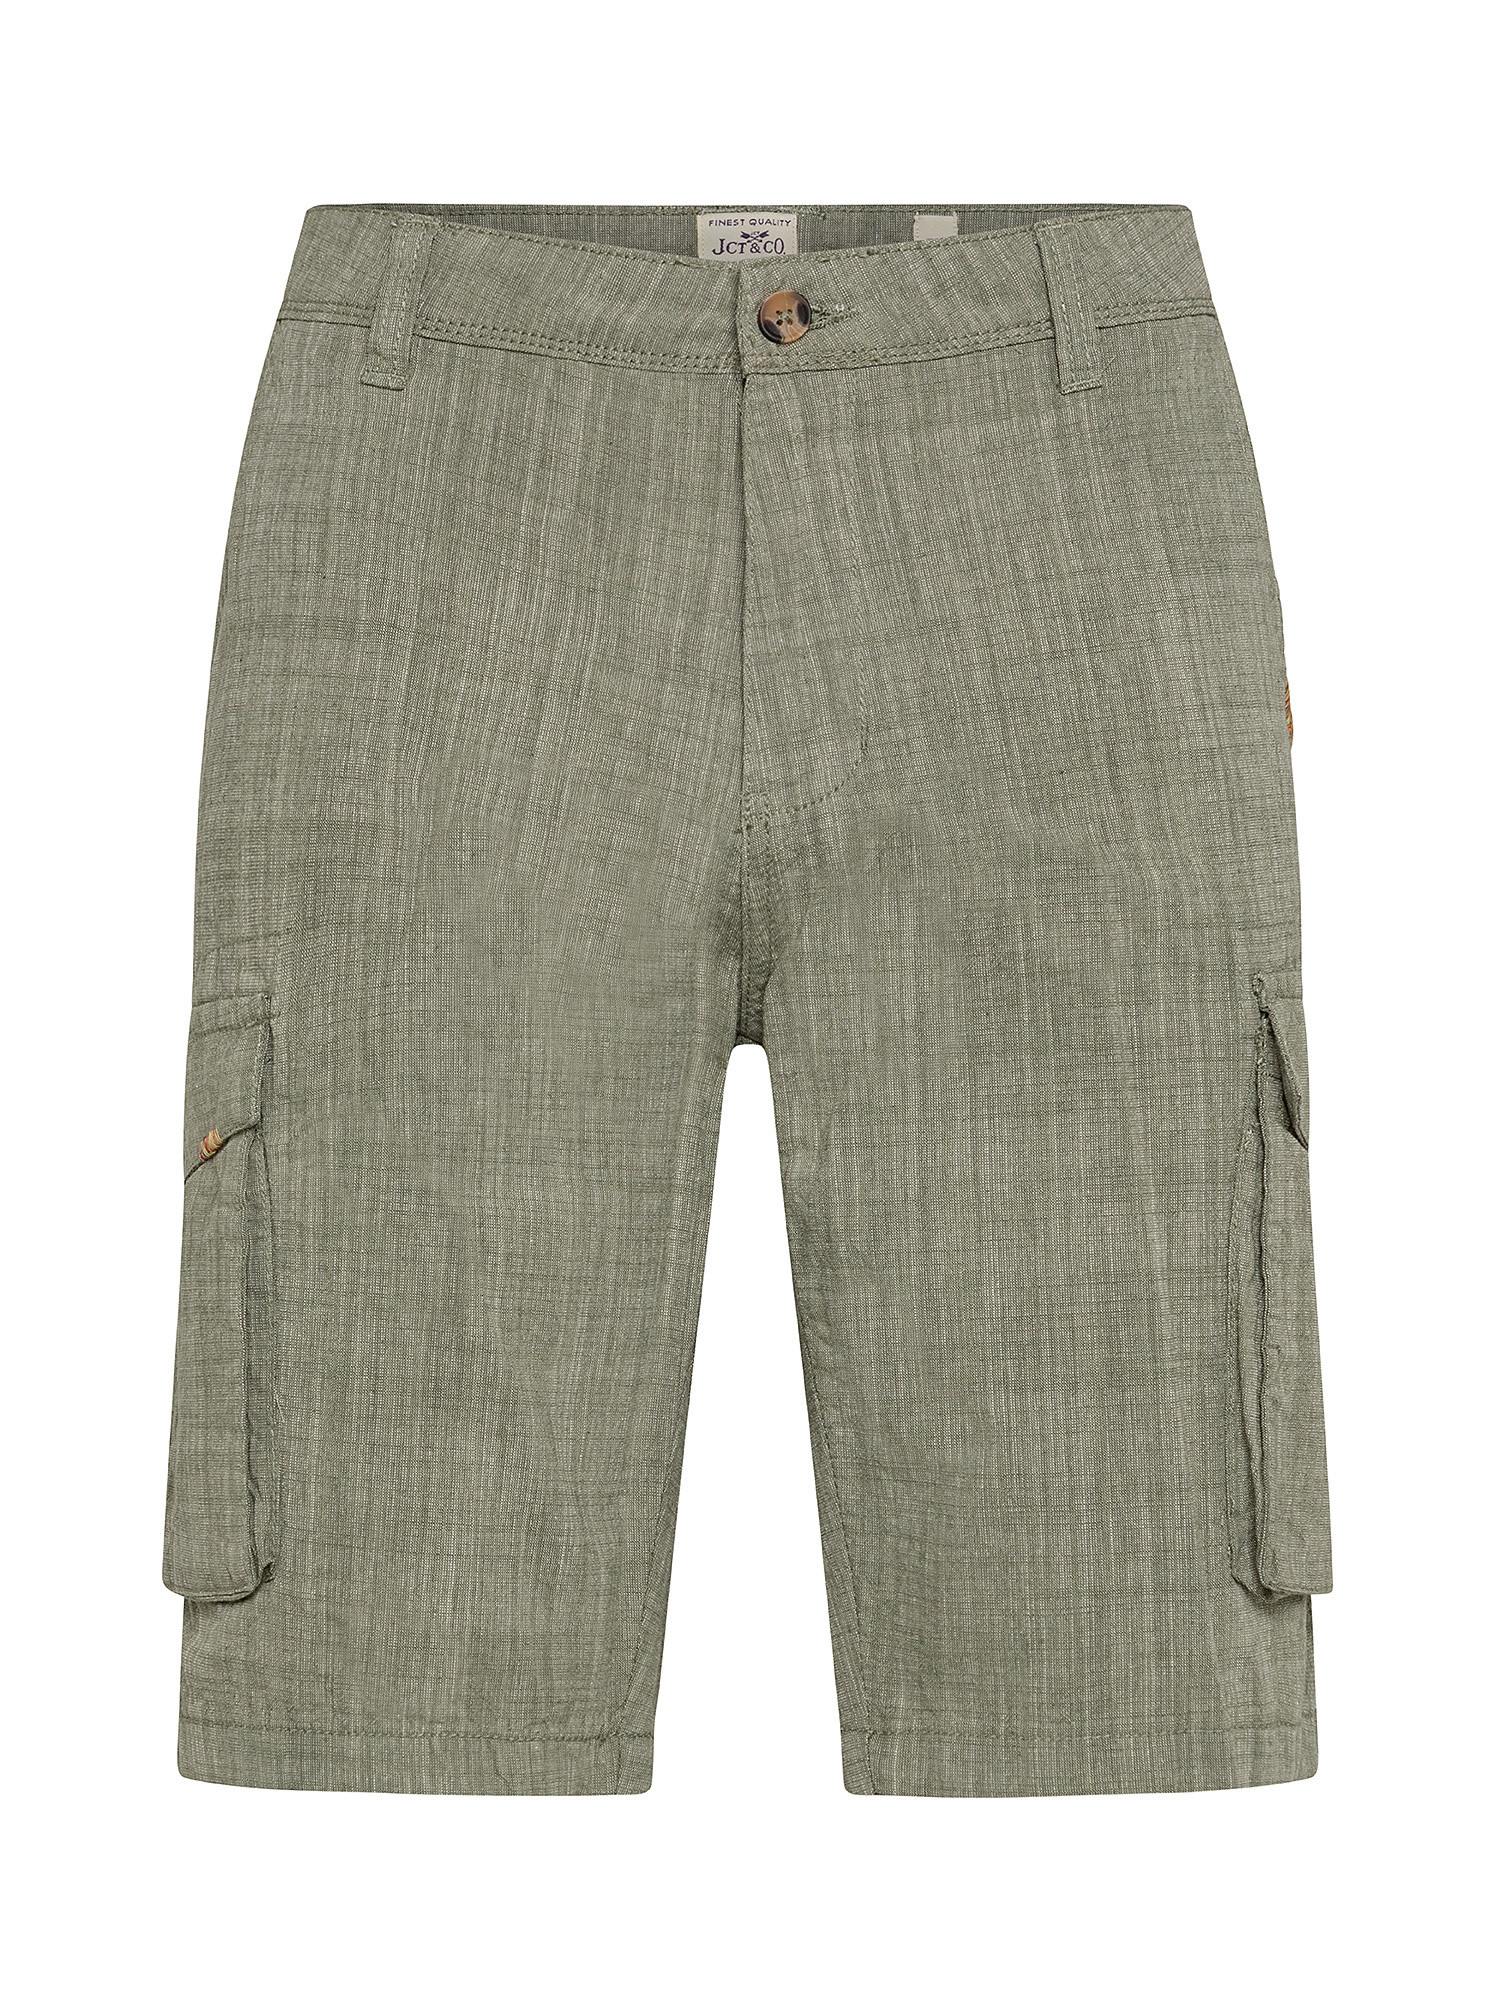 Cargo shorts, Green, large image number 0